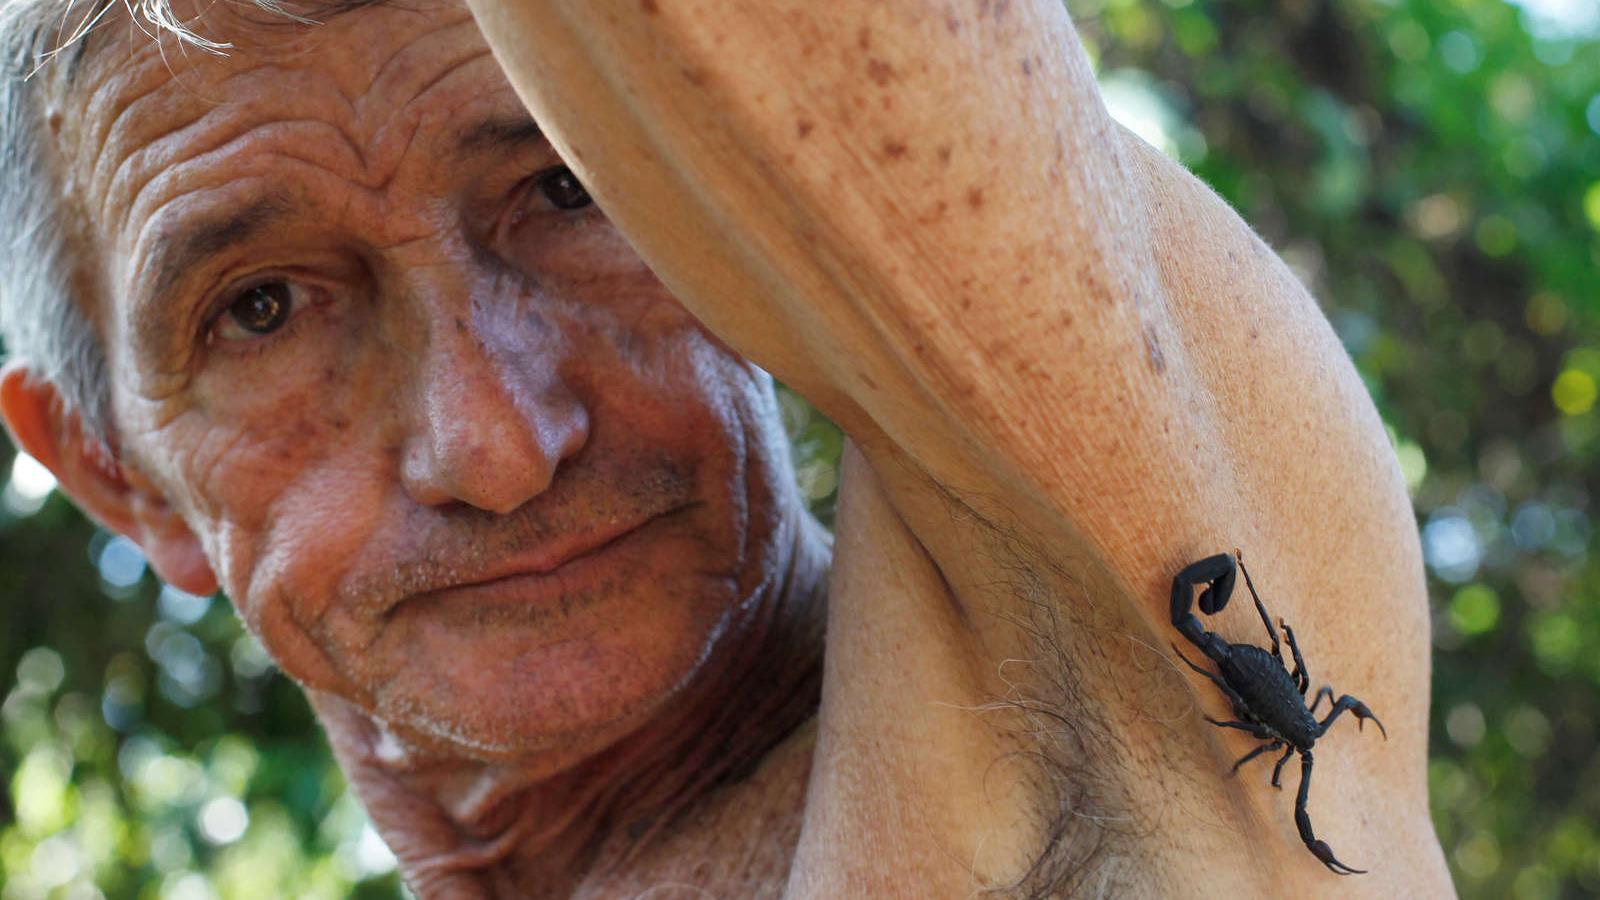 Farmer Pepe Casanas poses with a scorpion near his armpit in Los Palacios, Cuba. 